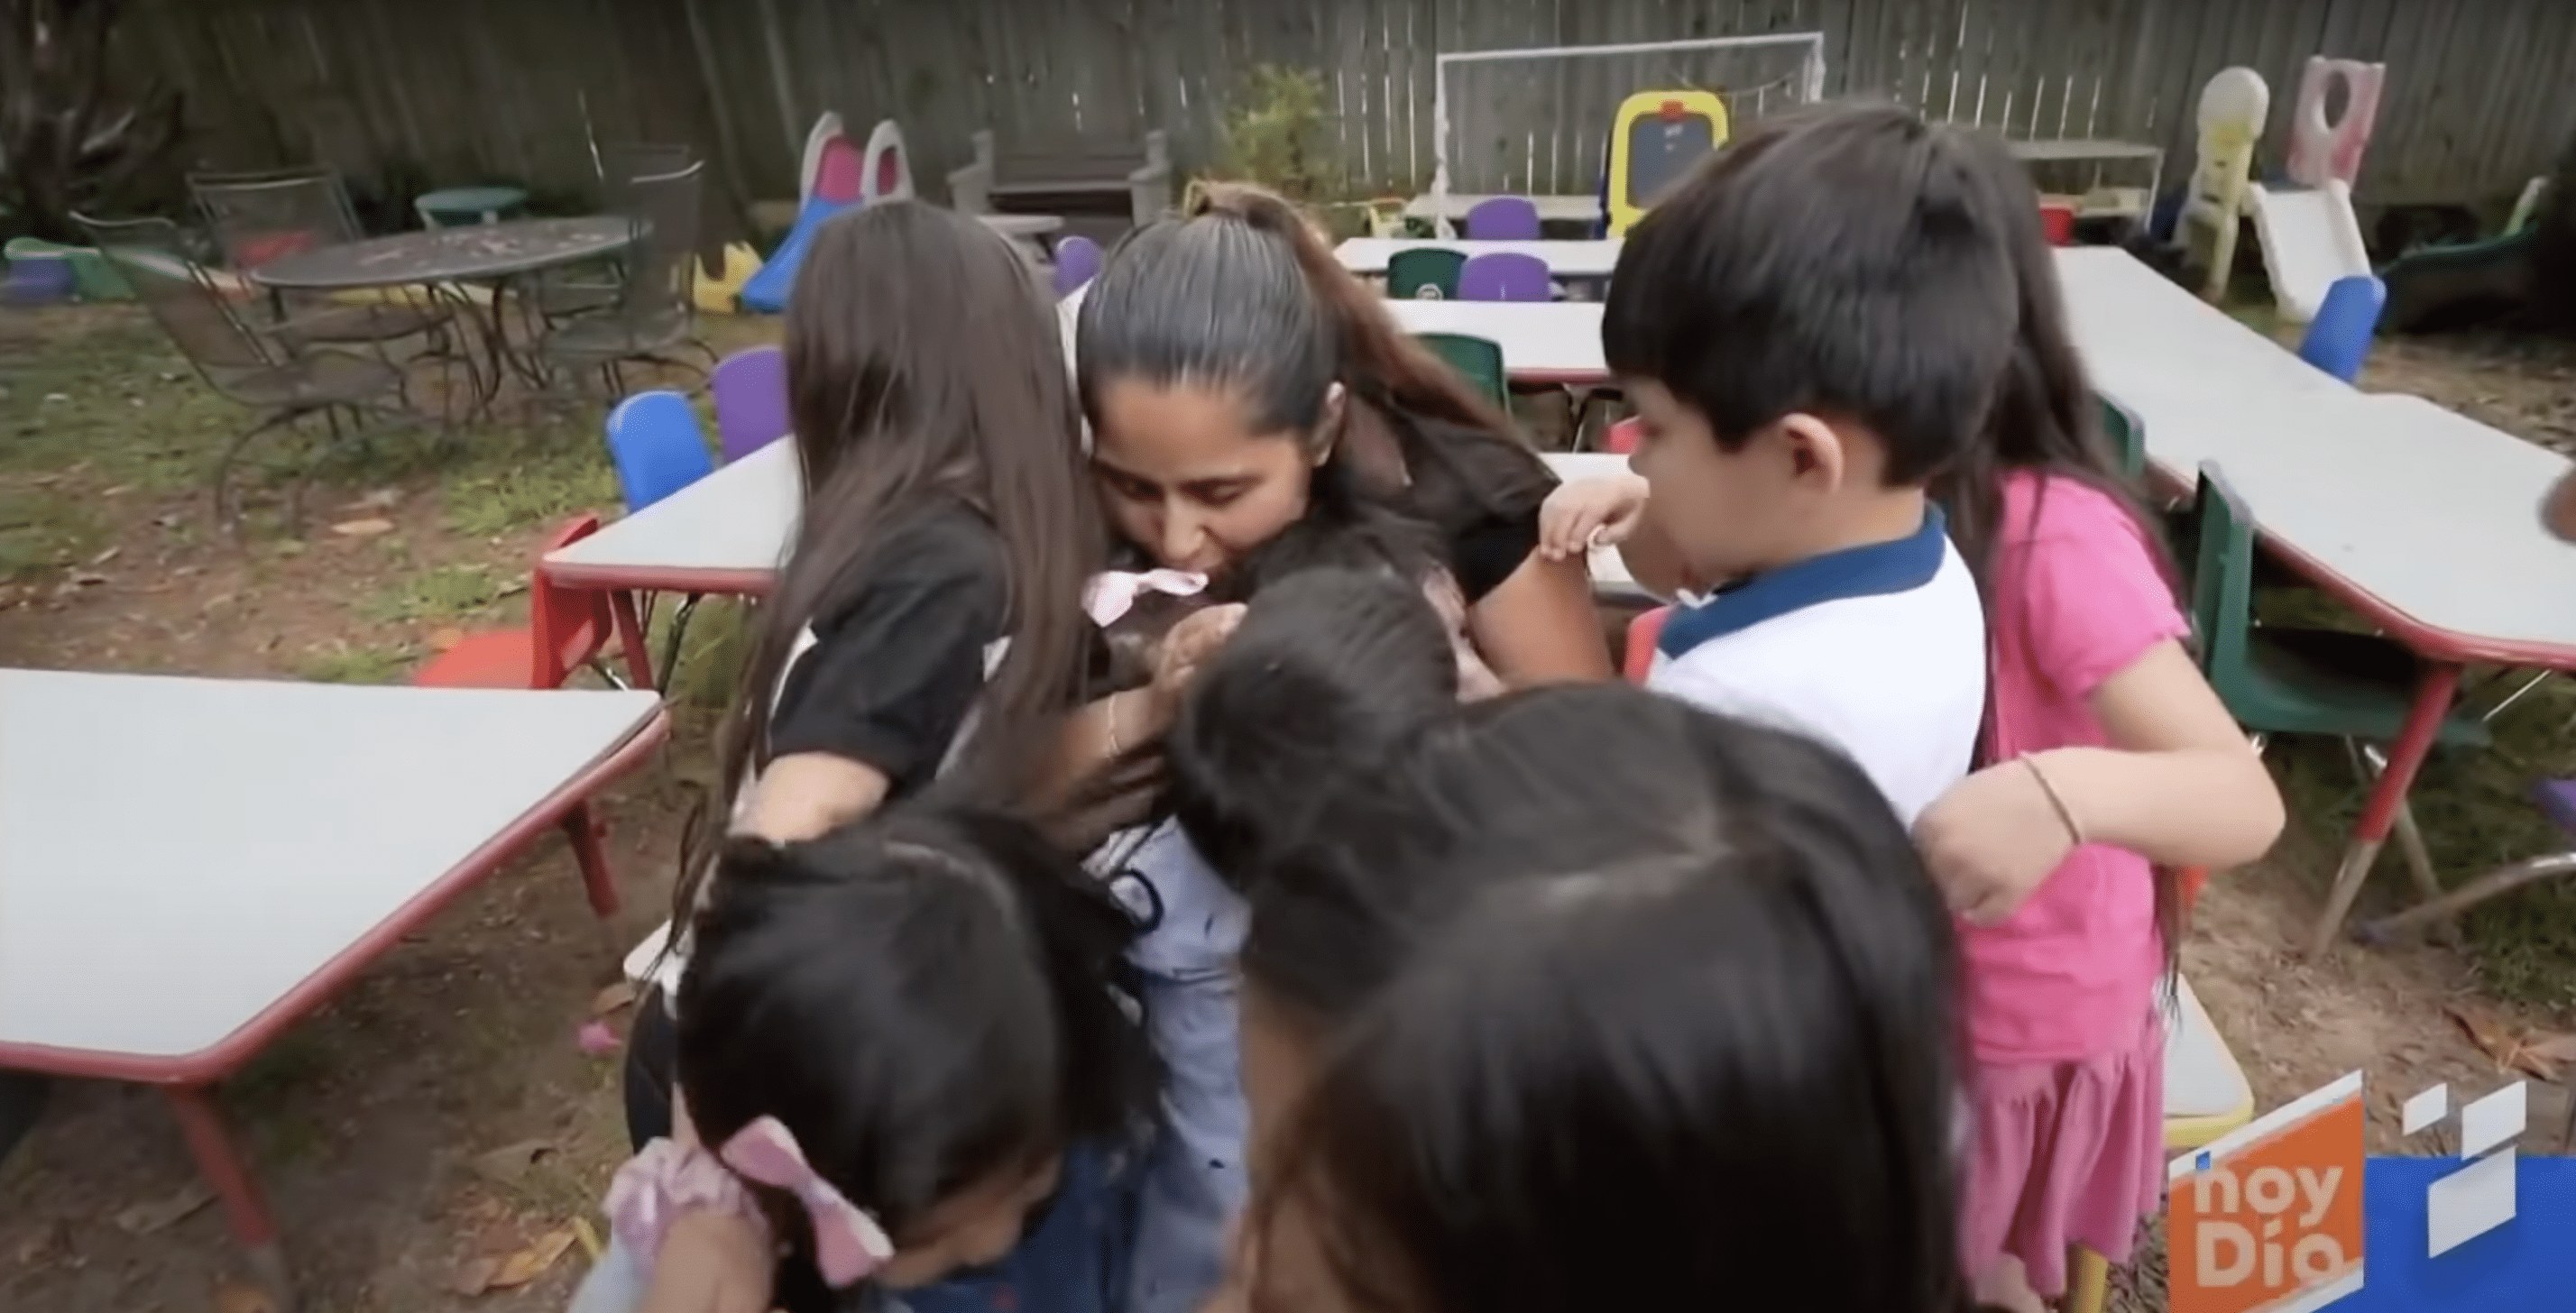 Patty Hernandez umarmt ihre Kinder. | Quelle: YouTube.com/hoy Día